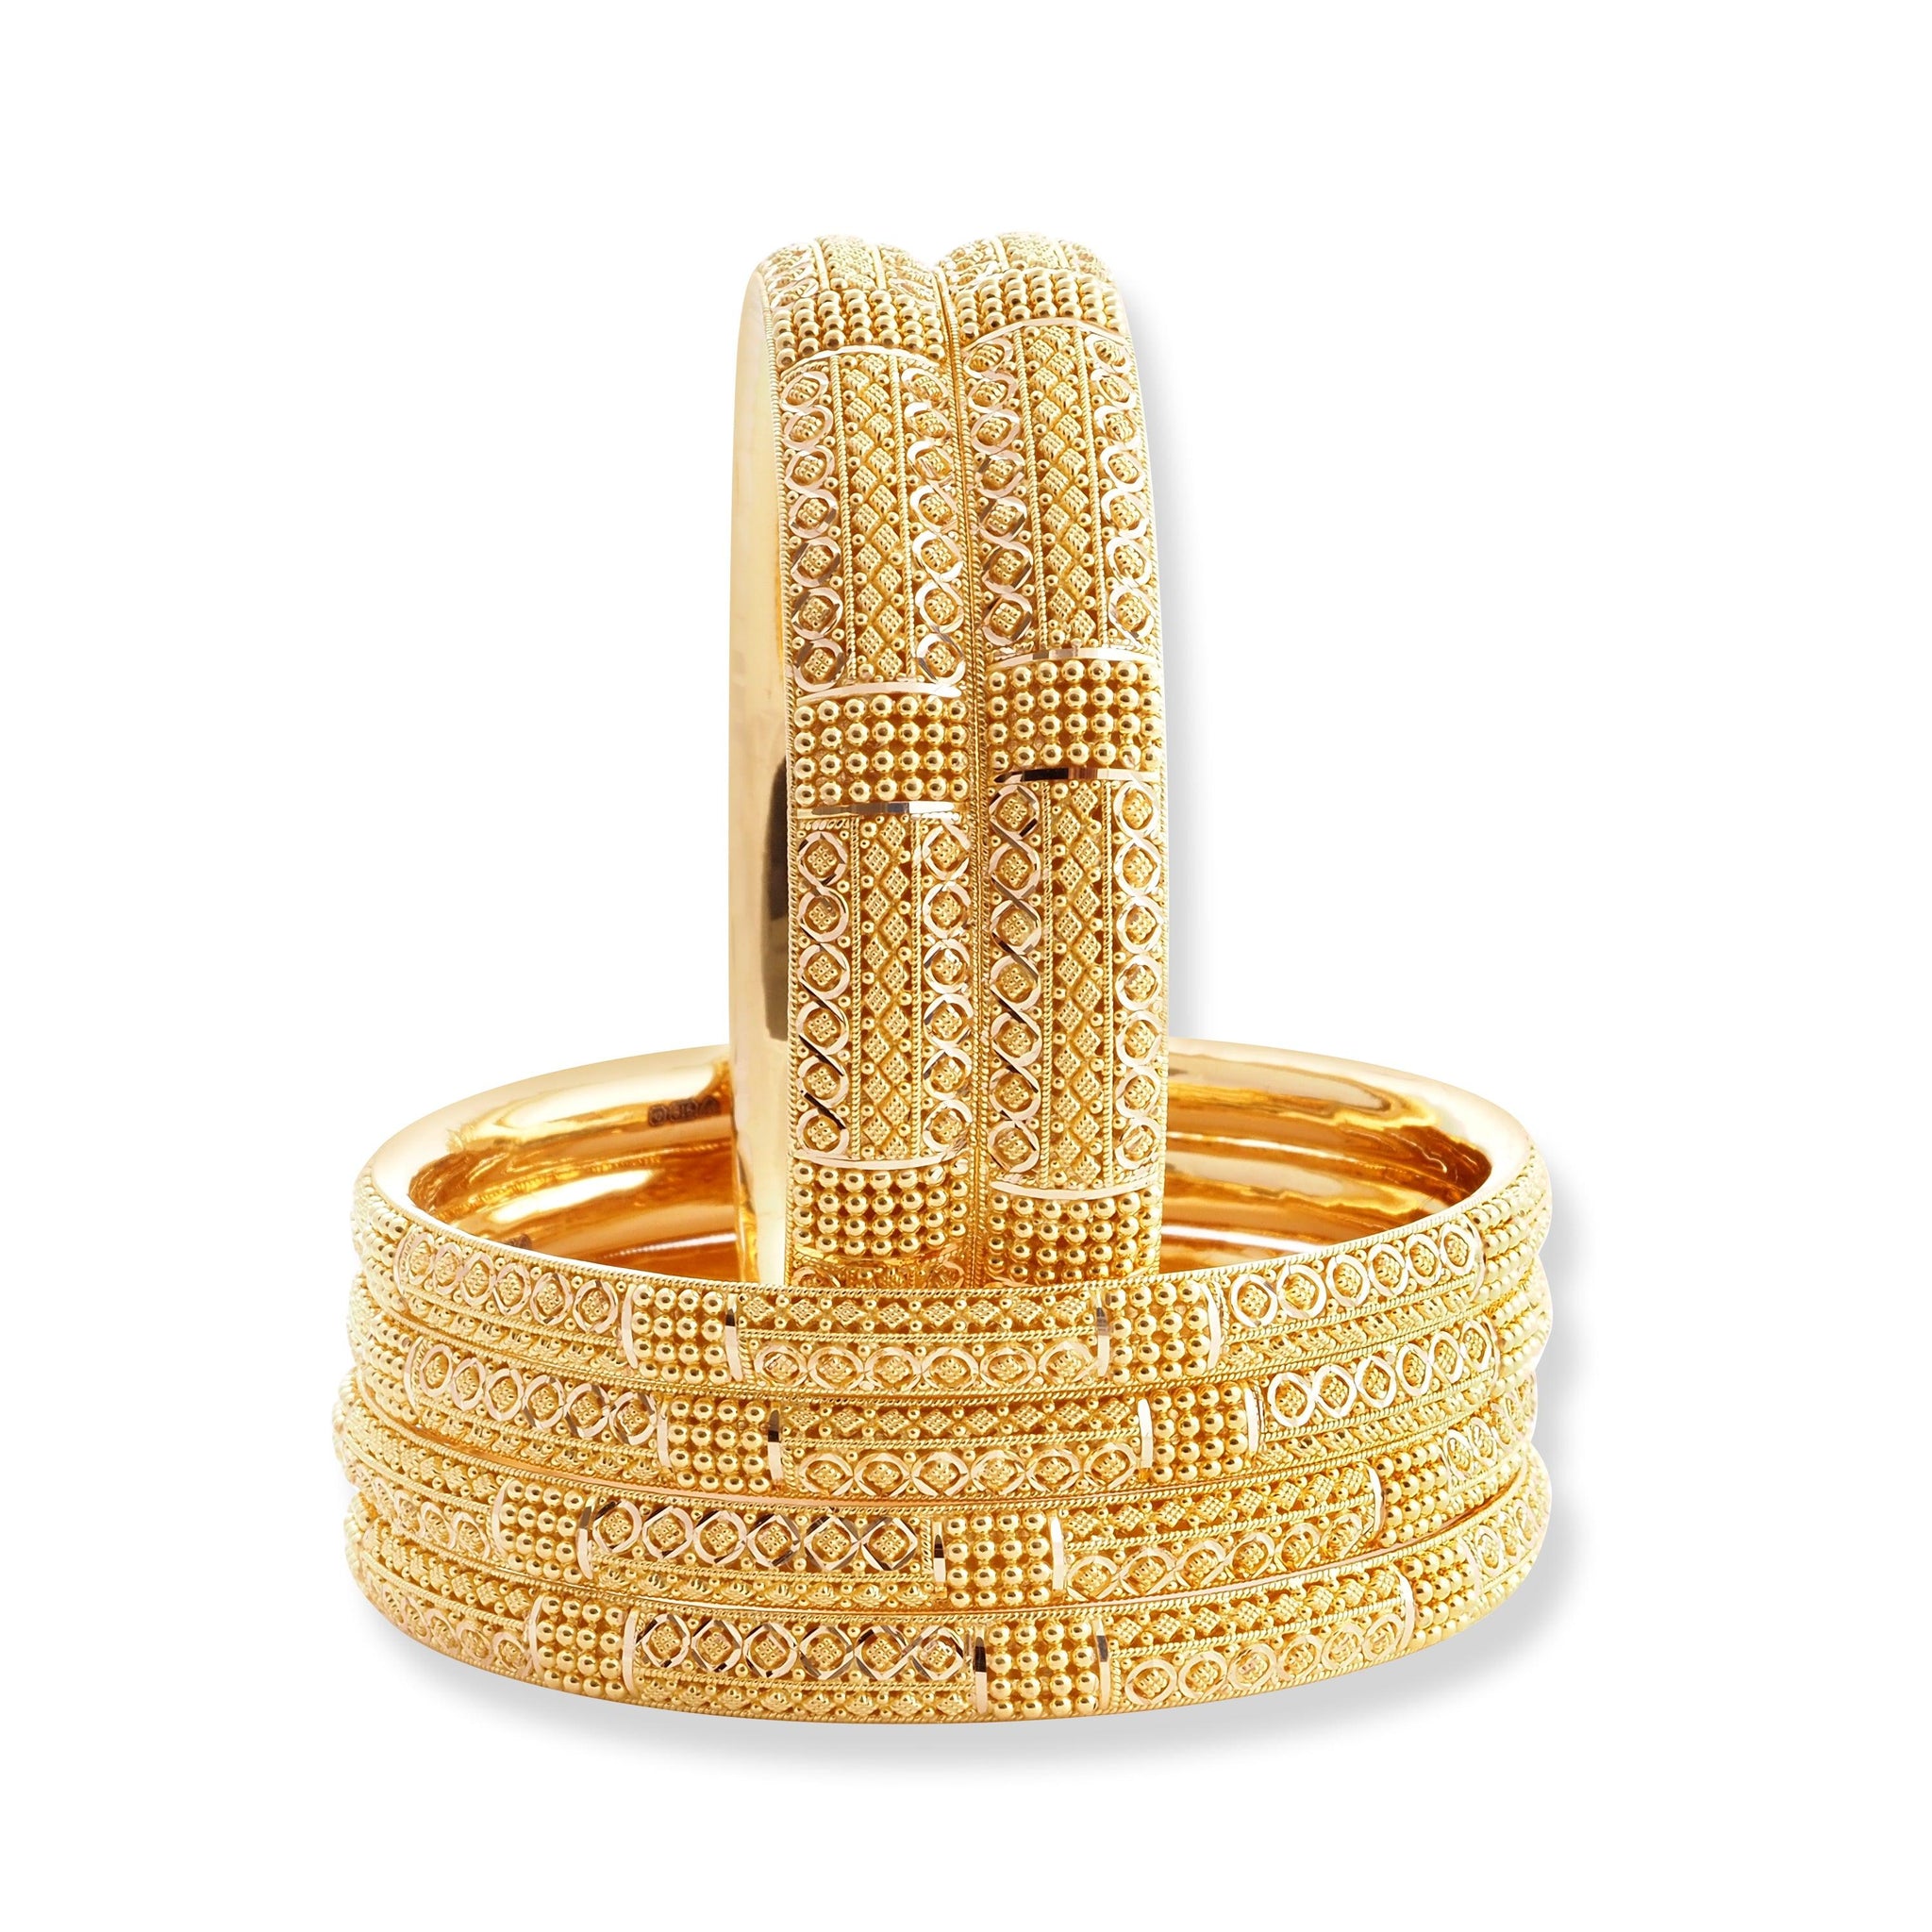 Set of Six 22ct Gold Bangles with Diamond Cut Bead Design and Filigree Work B-8571